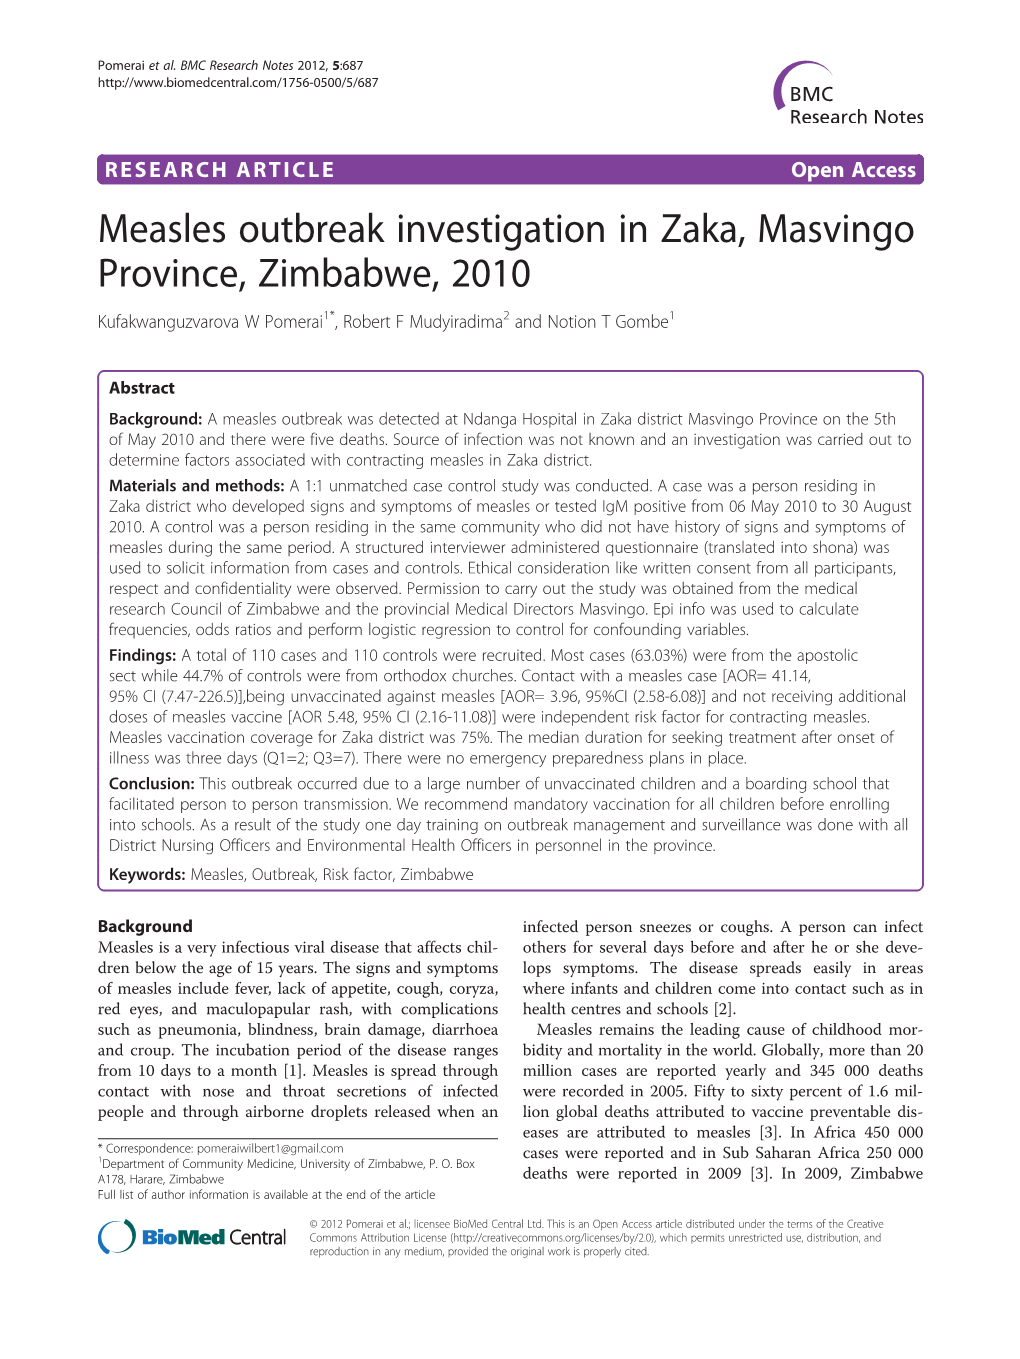 Measles Outbreak Investigation in Zaka, Masvingo Province, Zimbabwe, 2010 Kufakwanguzvarova W Pomerai1*, Robert F Mudyiradima2 and Notion T Gombe1